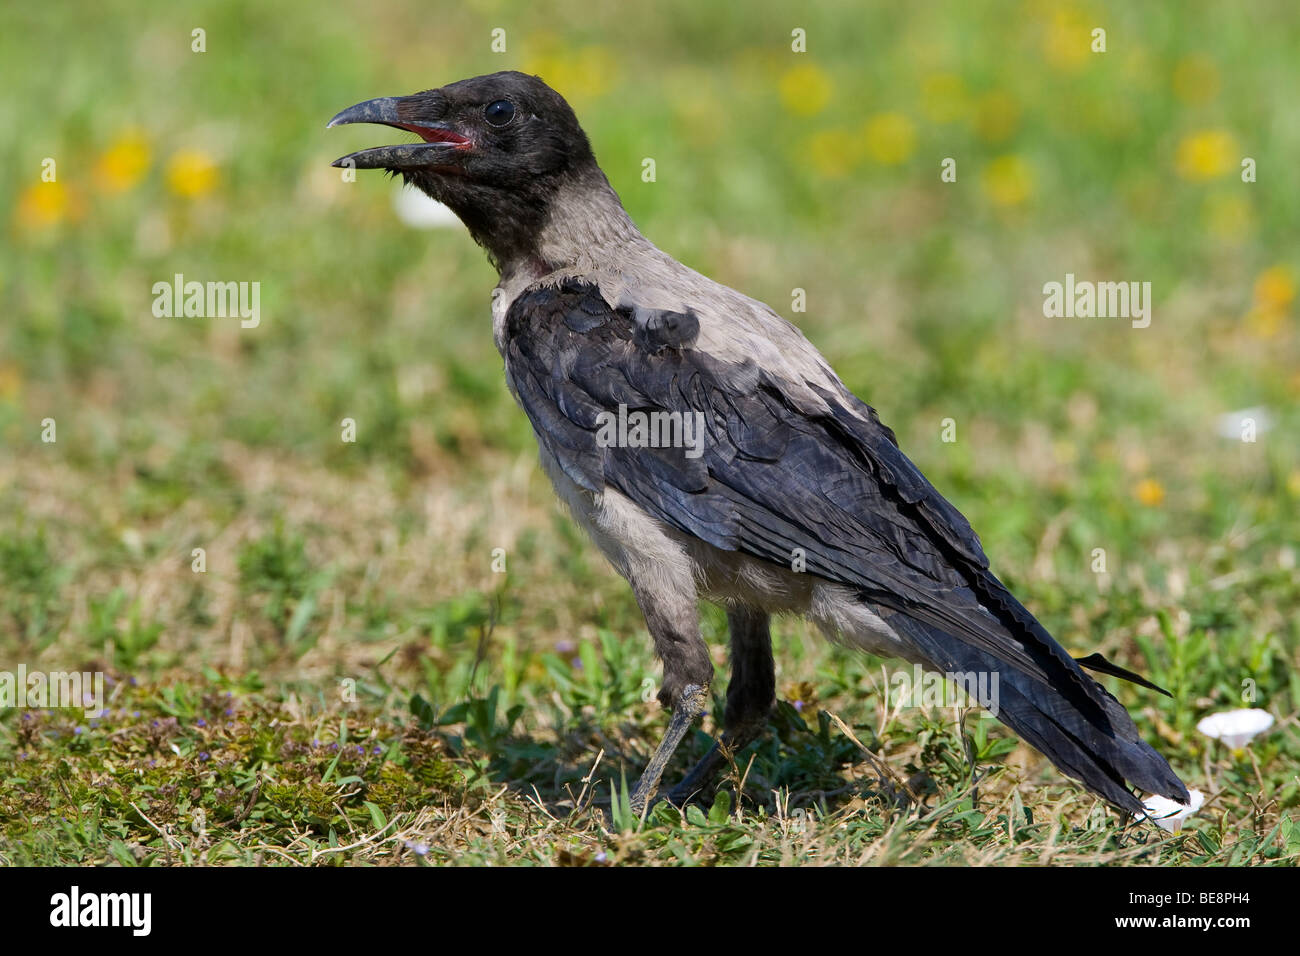 Bonte Kraai staand Roepende in het gras. Appelant Hooded Crow debout dans un champ d'herbe. Banque D'Images